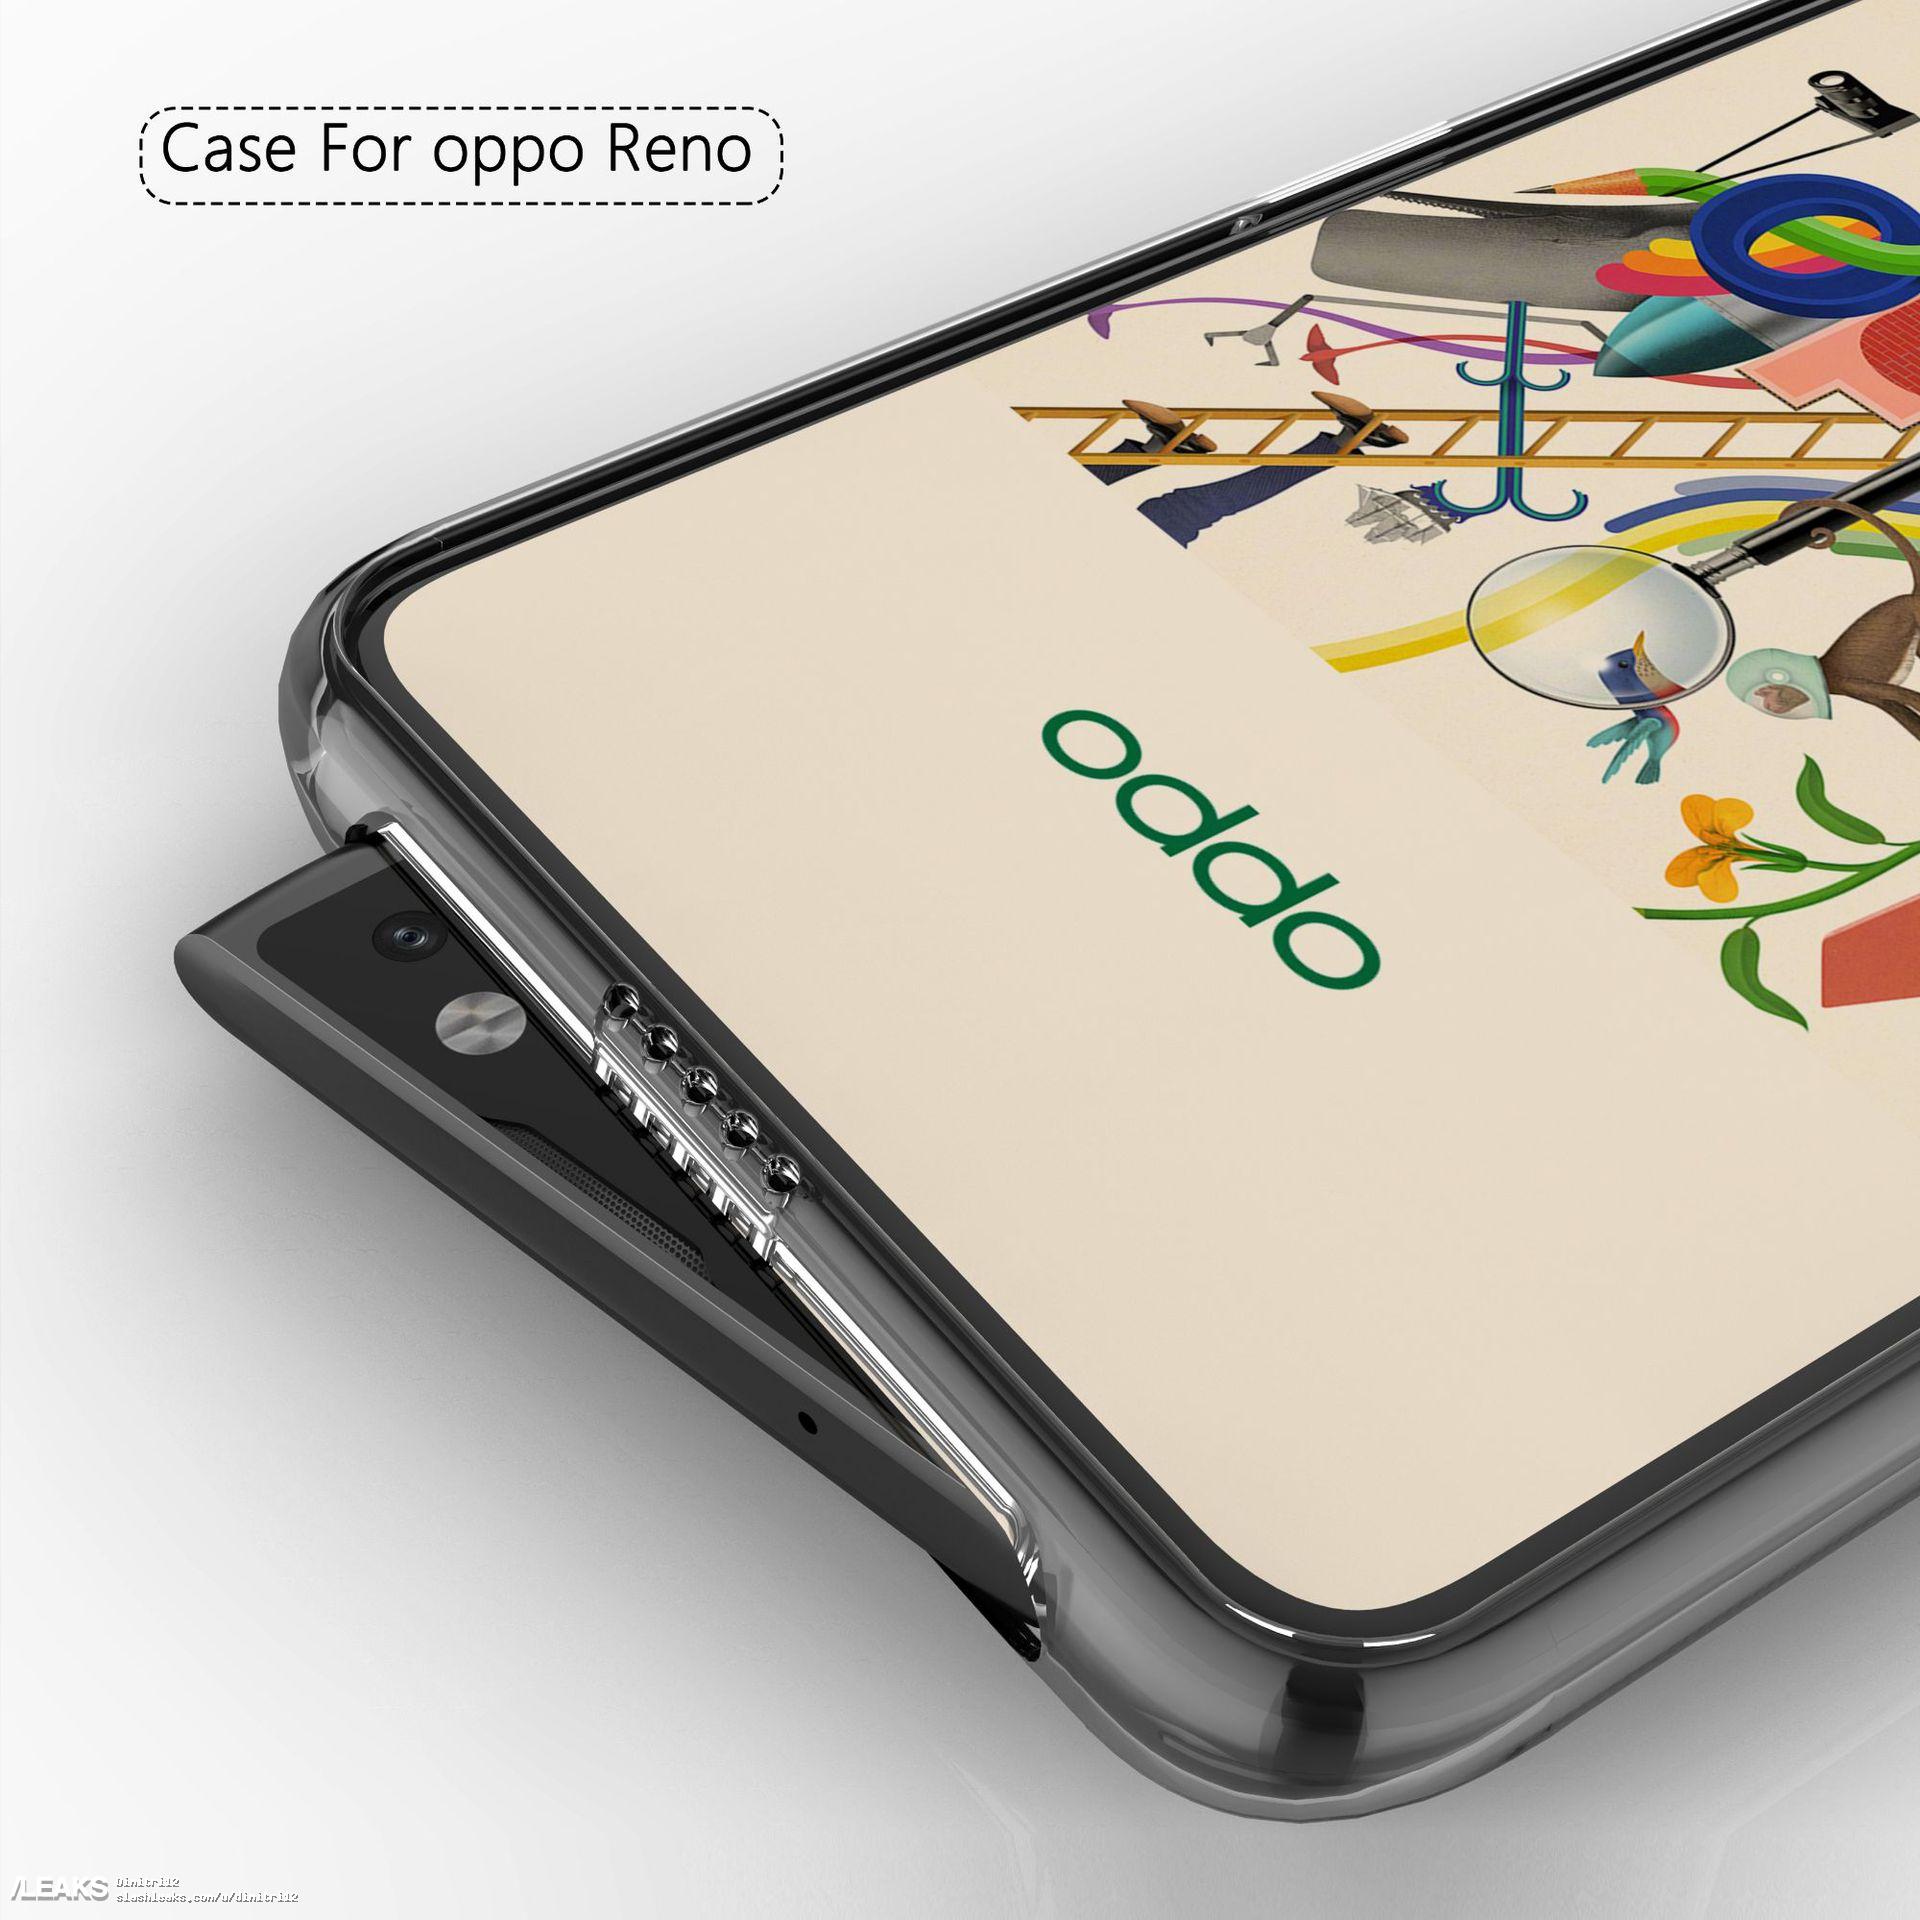 OPPO-Reno-case-renders-c